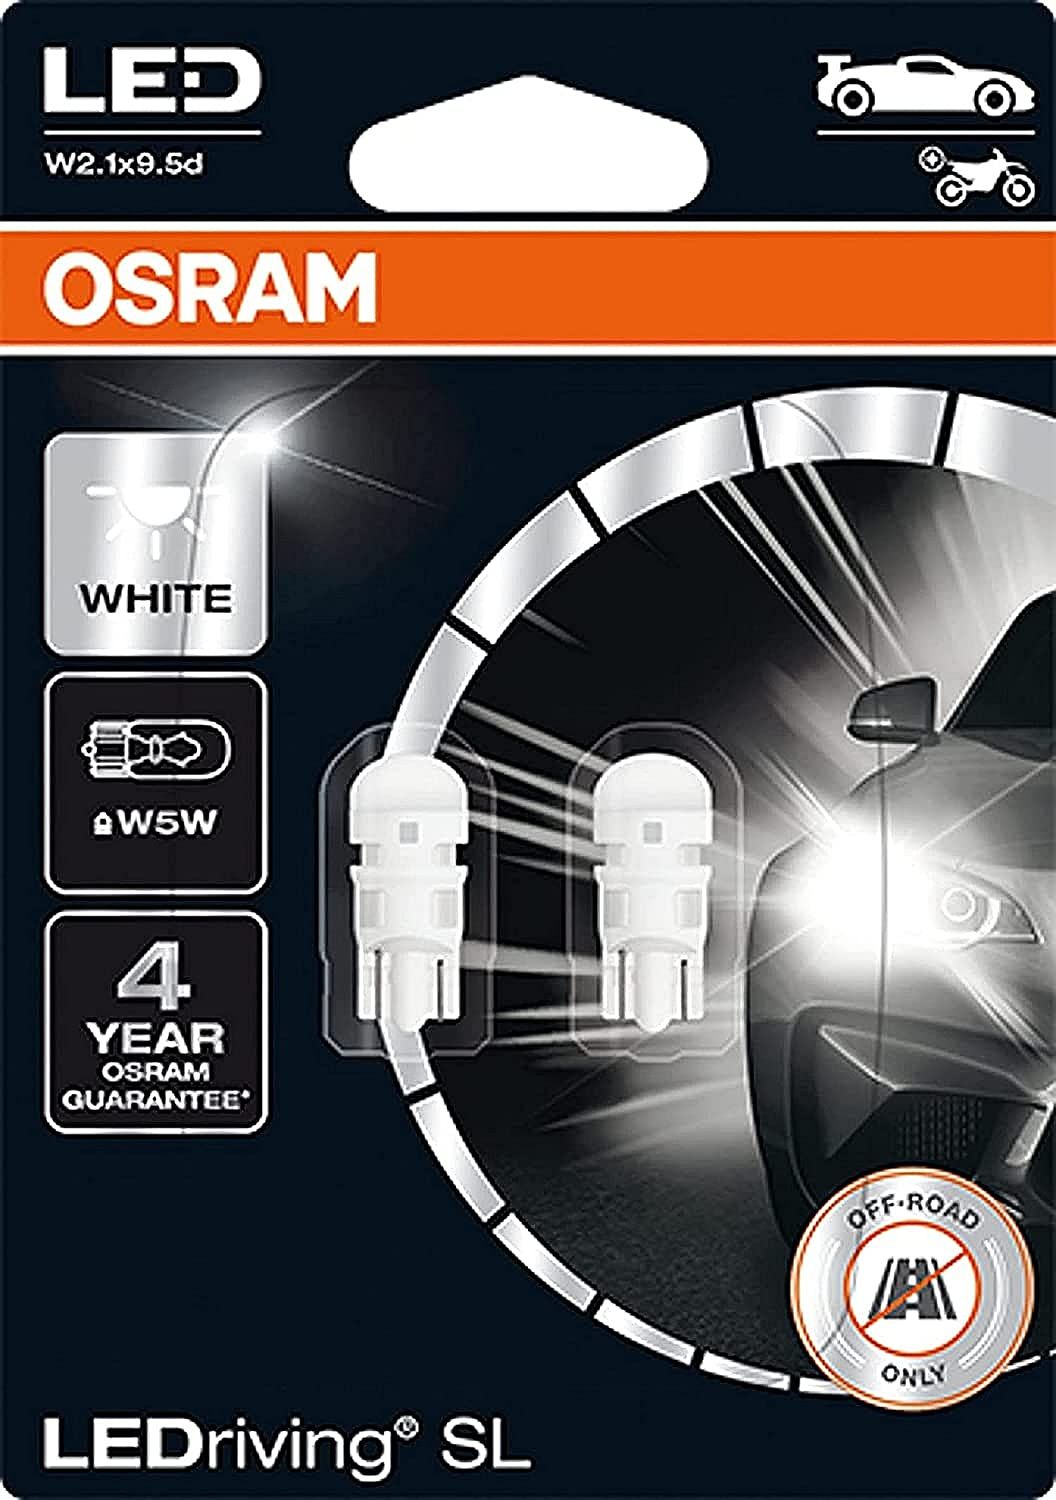 OSRAM LEDriving SL LED P21/5W 6000K Cool White (Twin)